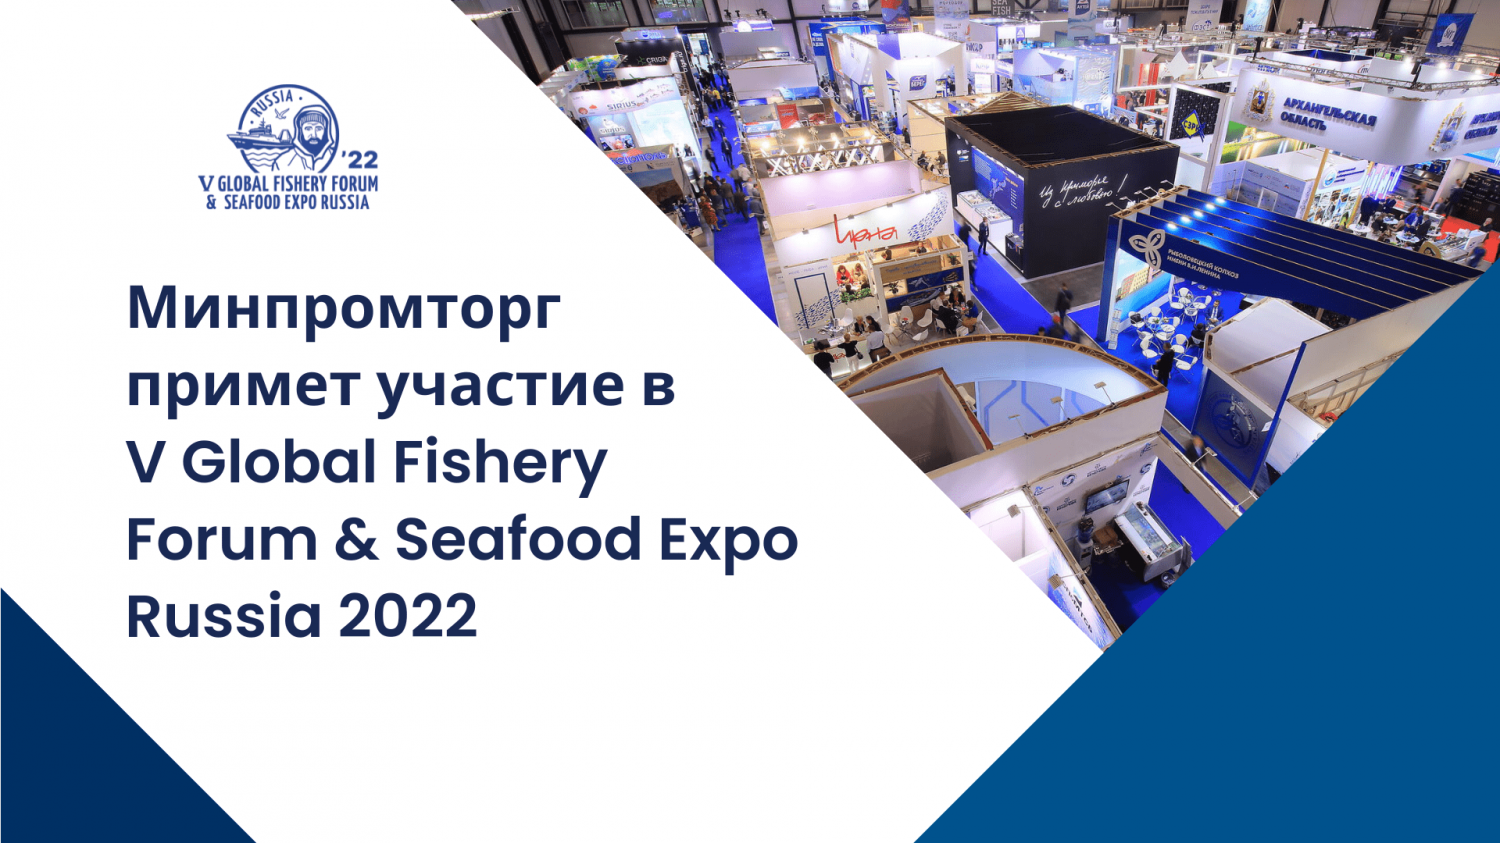 Минпромторг примет участие в V Global Fishery Forum & Seafood Expo Russia 2022